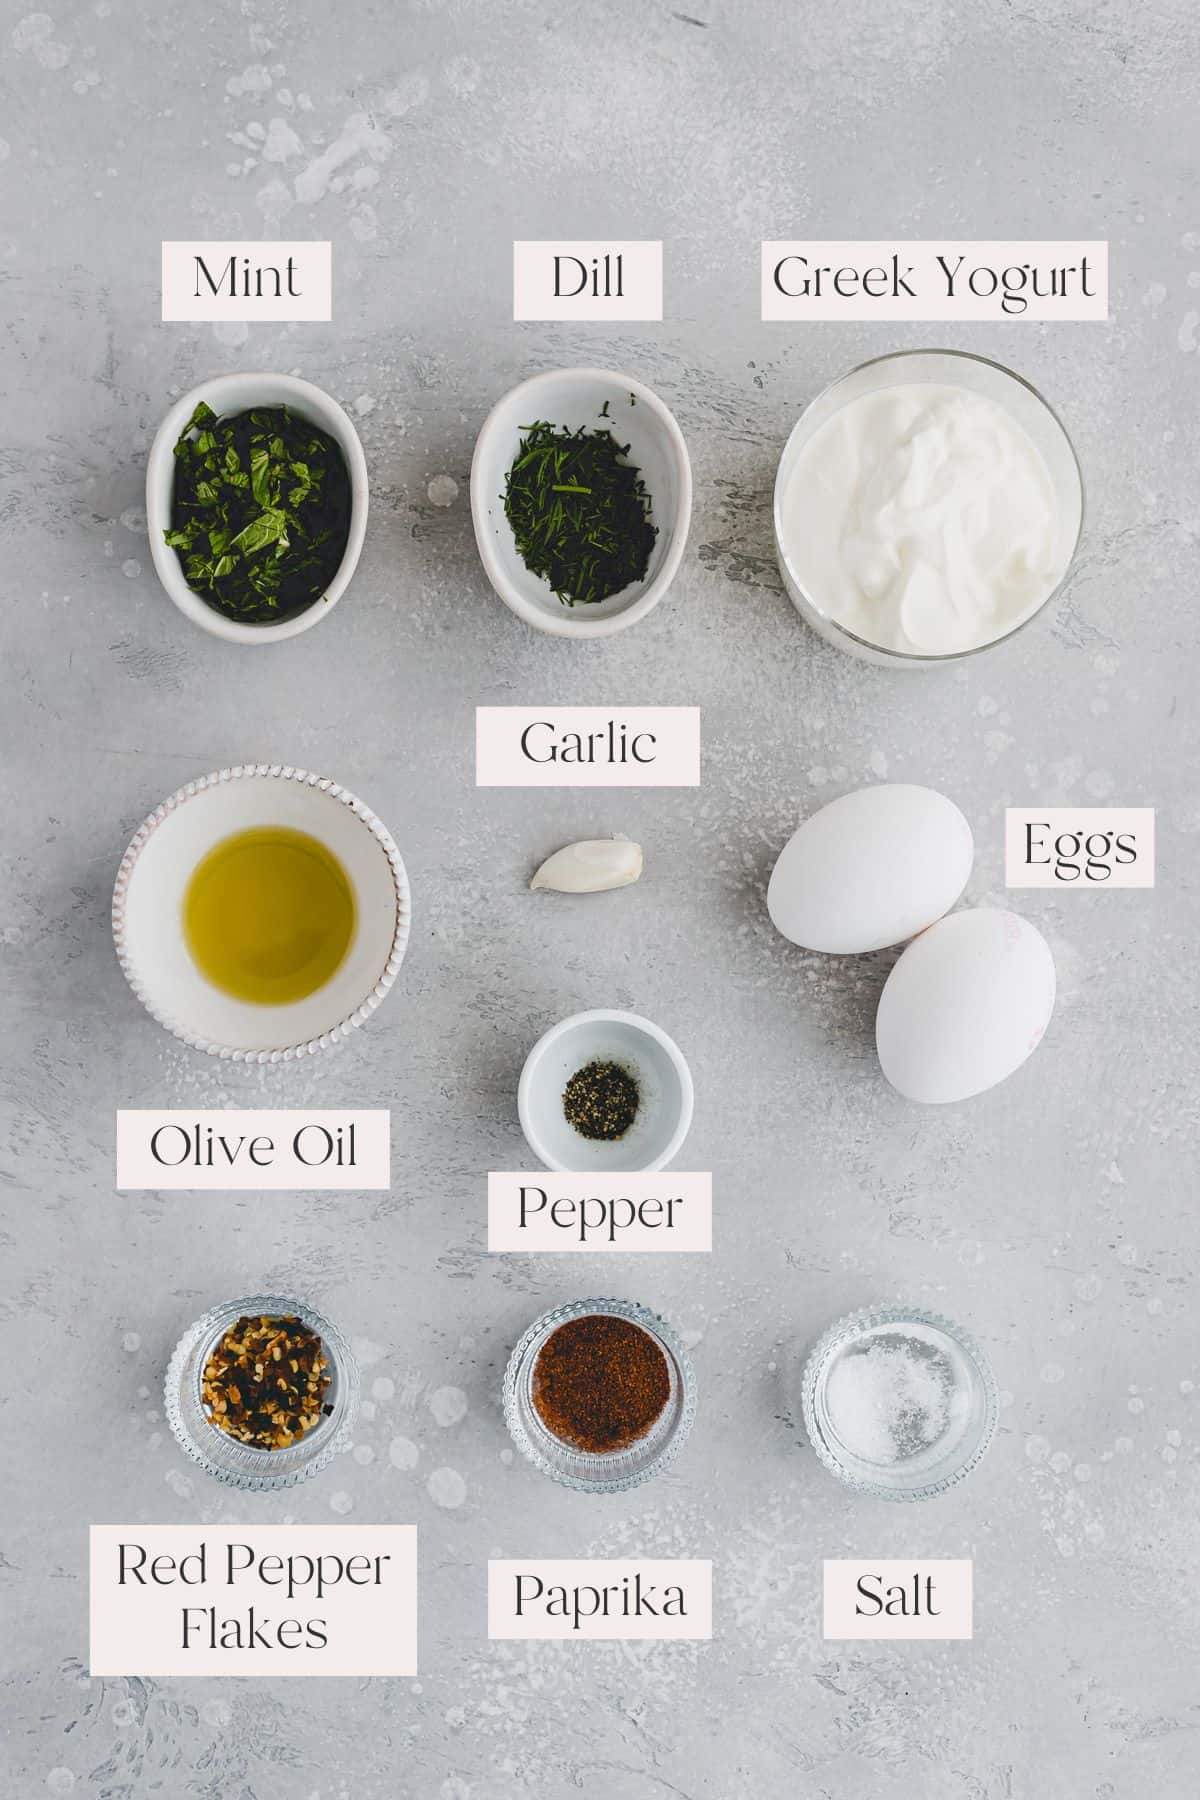 Turkish Eggs Ingredients